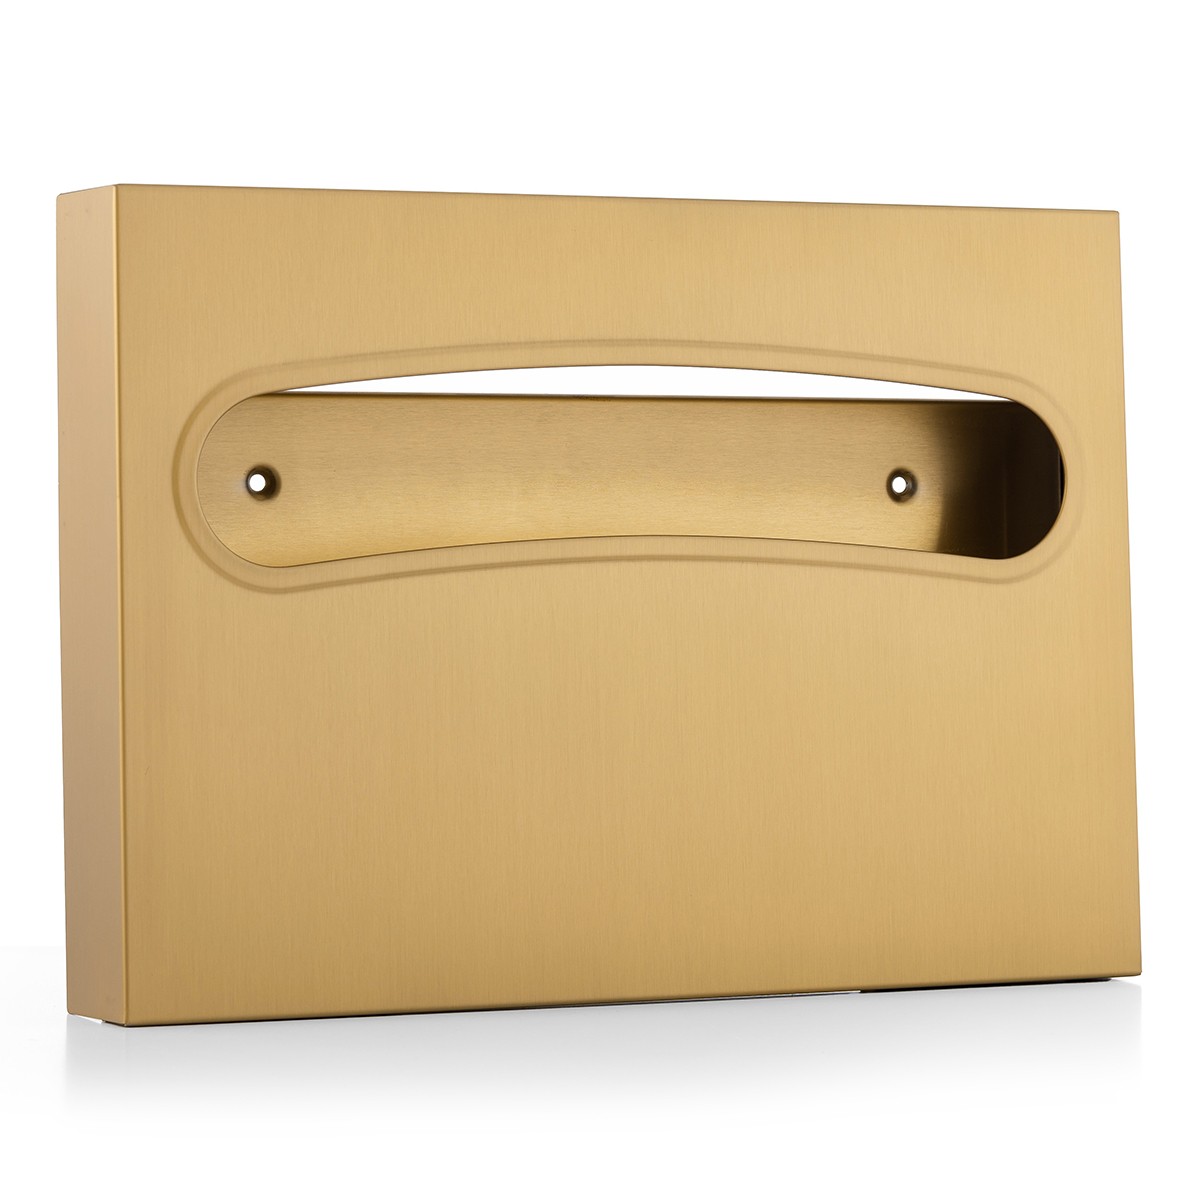 Toilet Seat Cover Dispenser - Gold